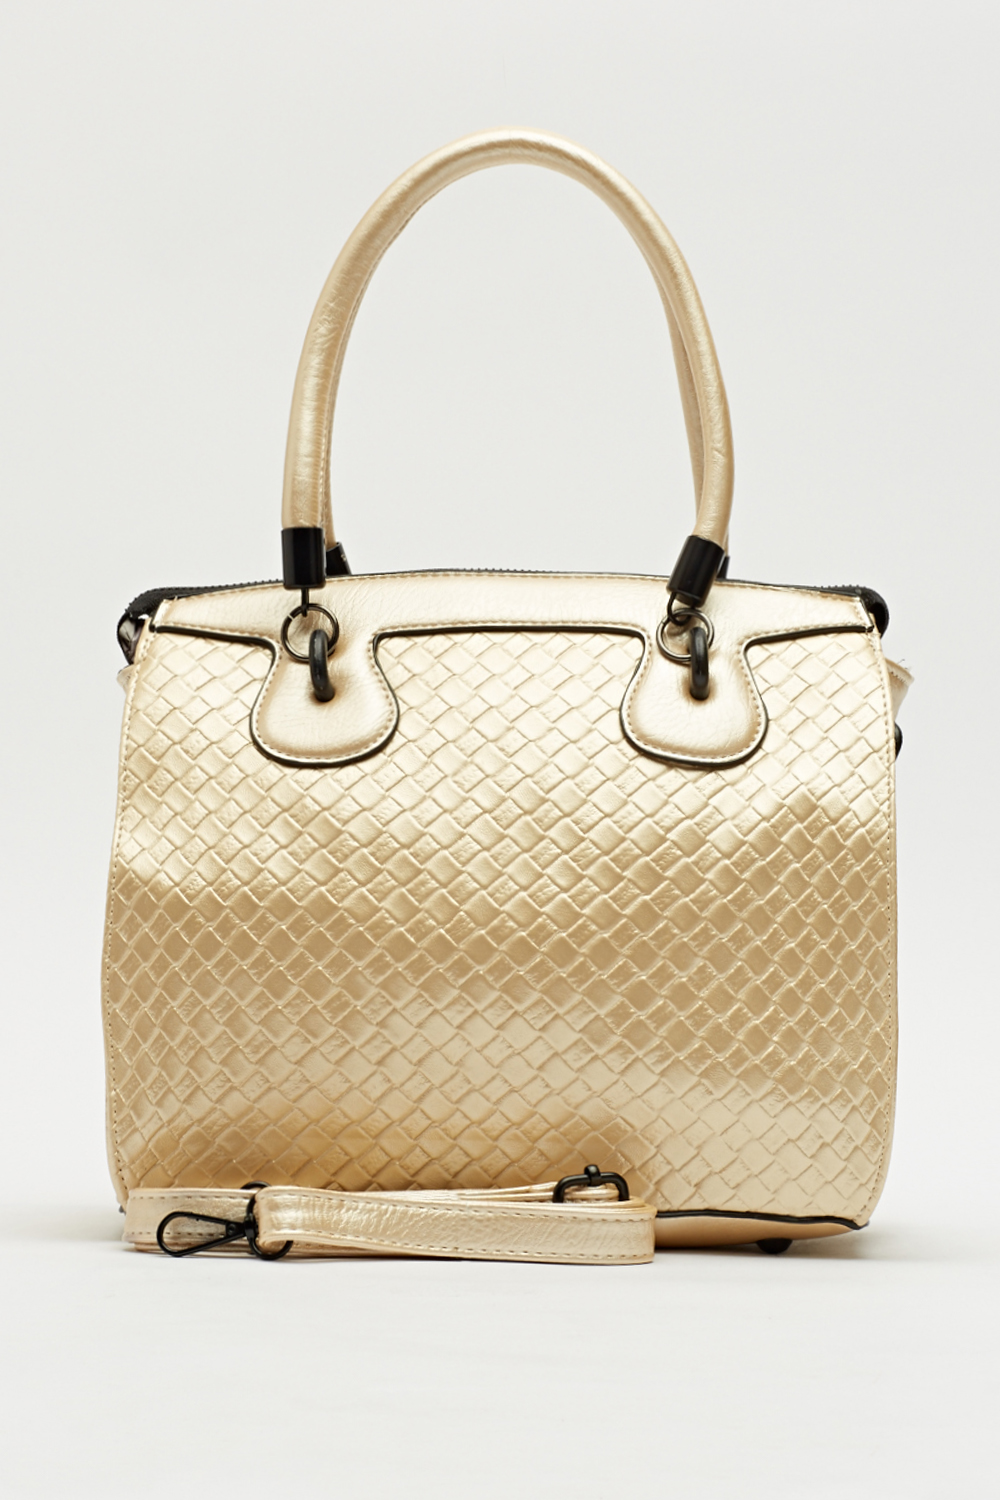 Woven Textured Embossed Handbag - Just $7